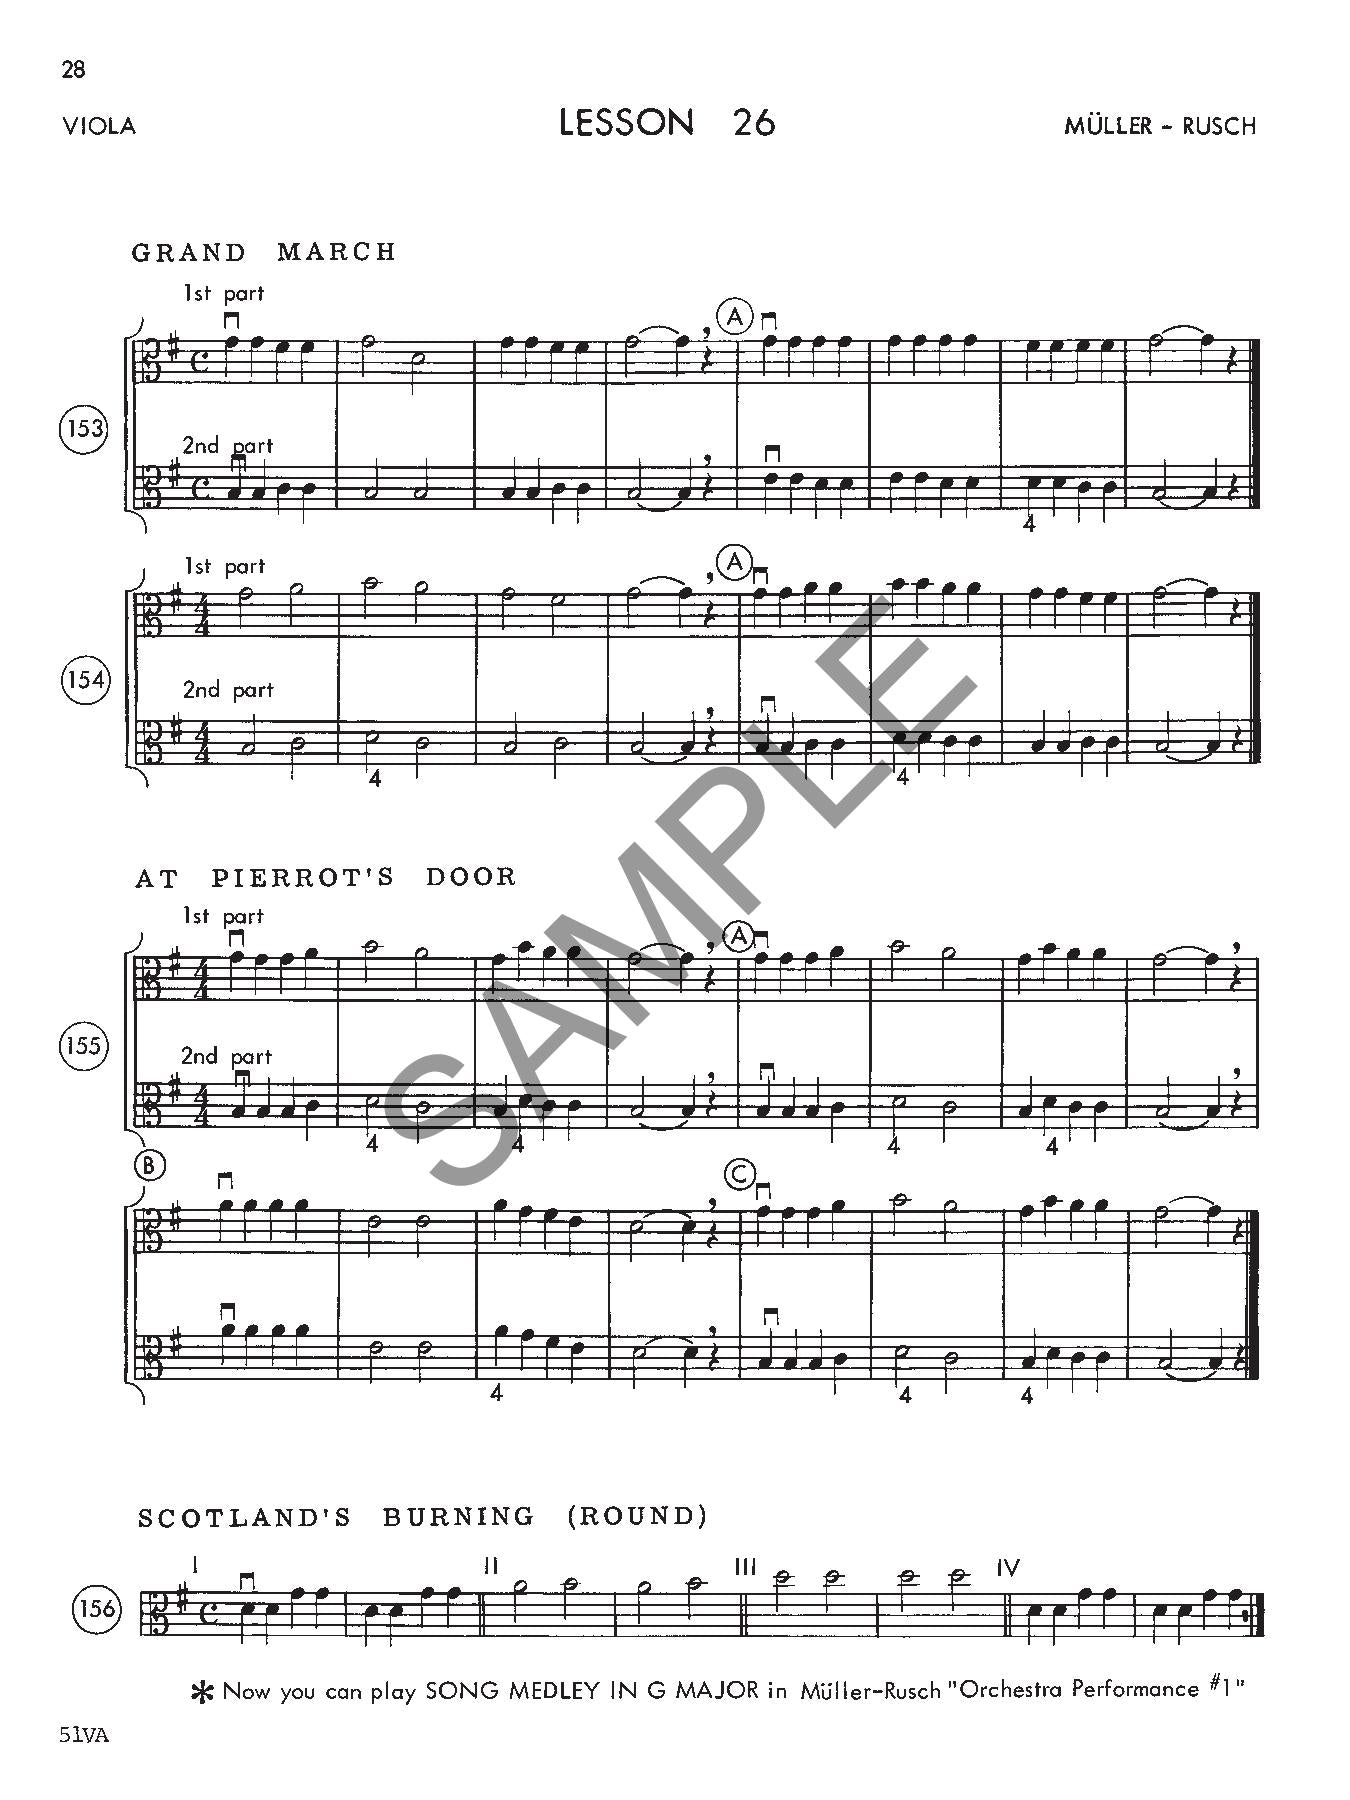 Müller-Rusch String Method Book 1 - Viola